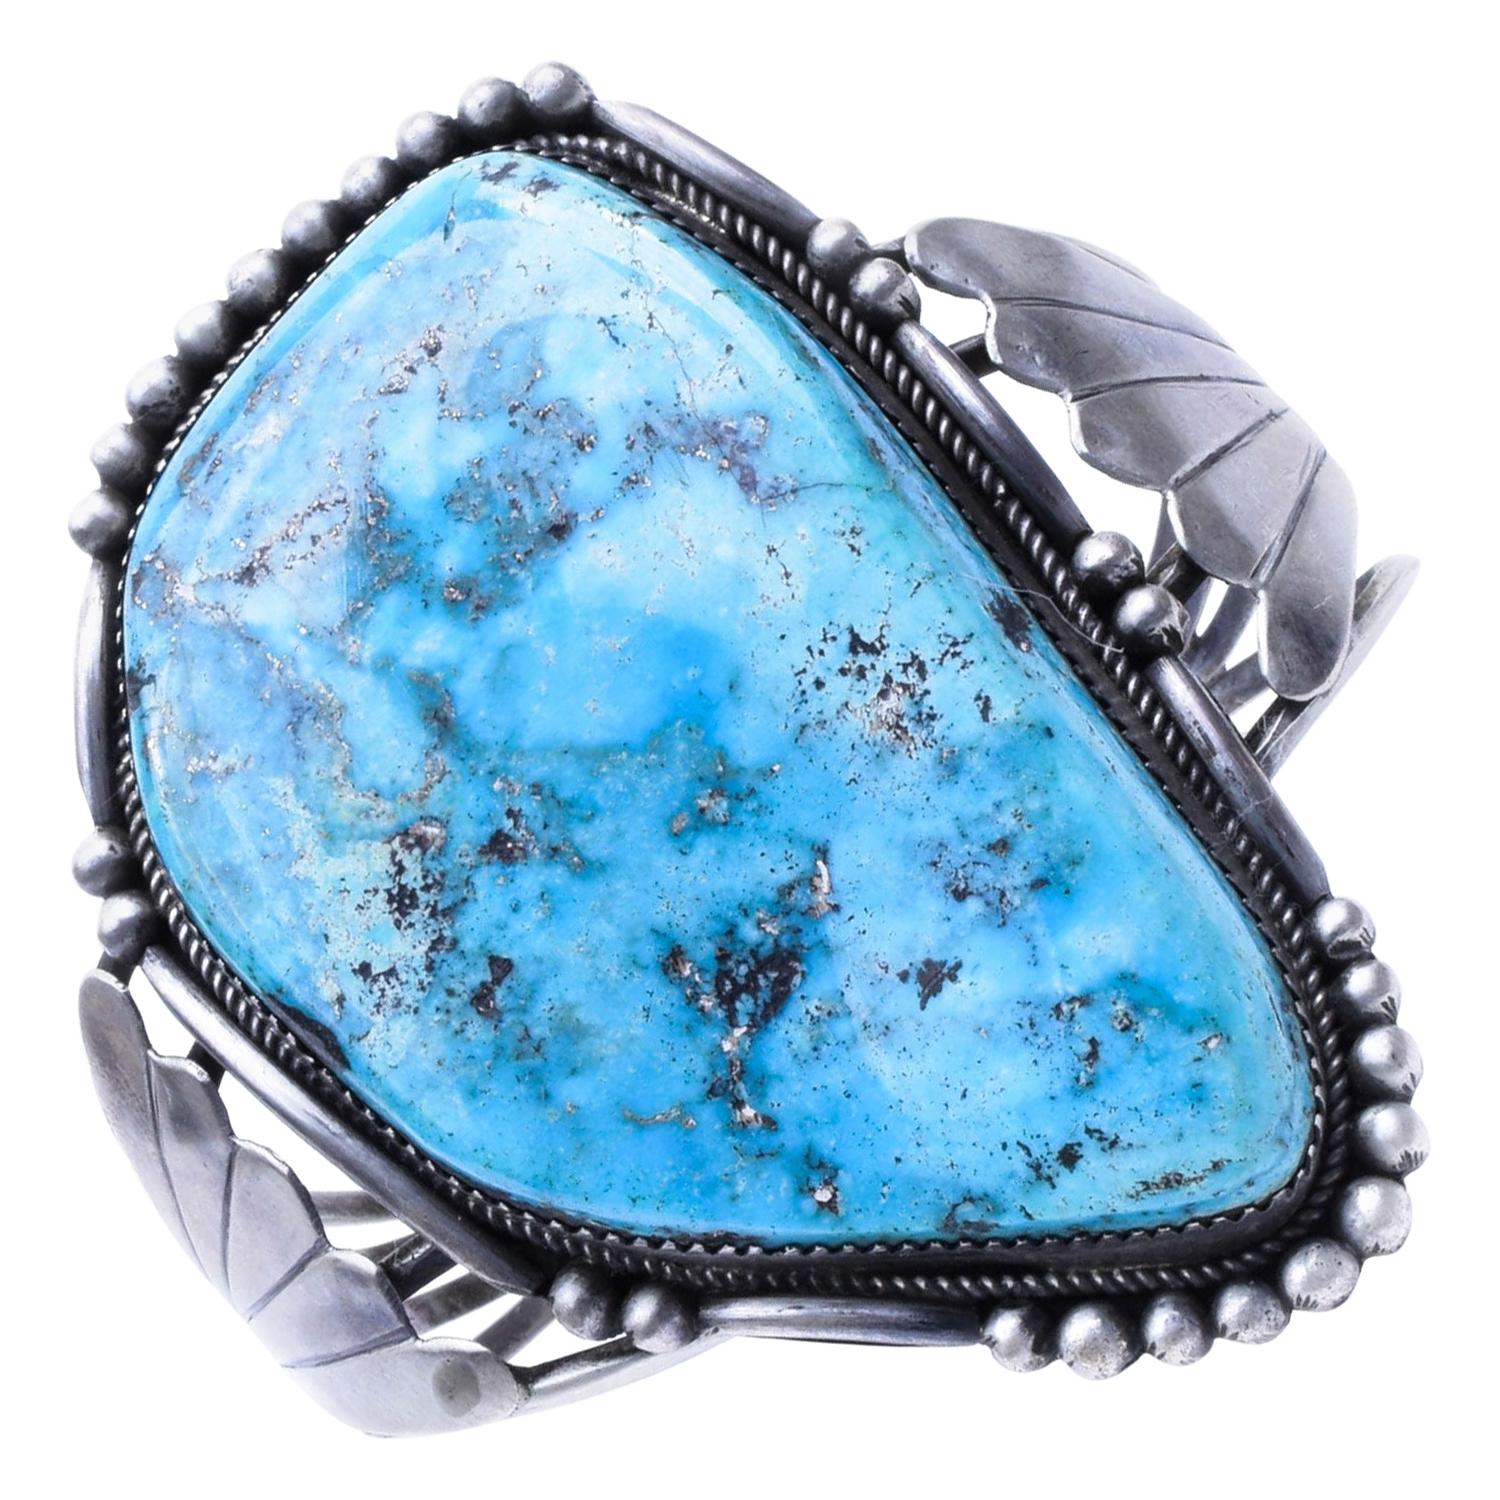 Navajo Kingman Turquoise and Sterling Bracelet